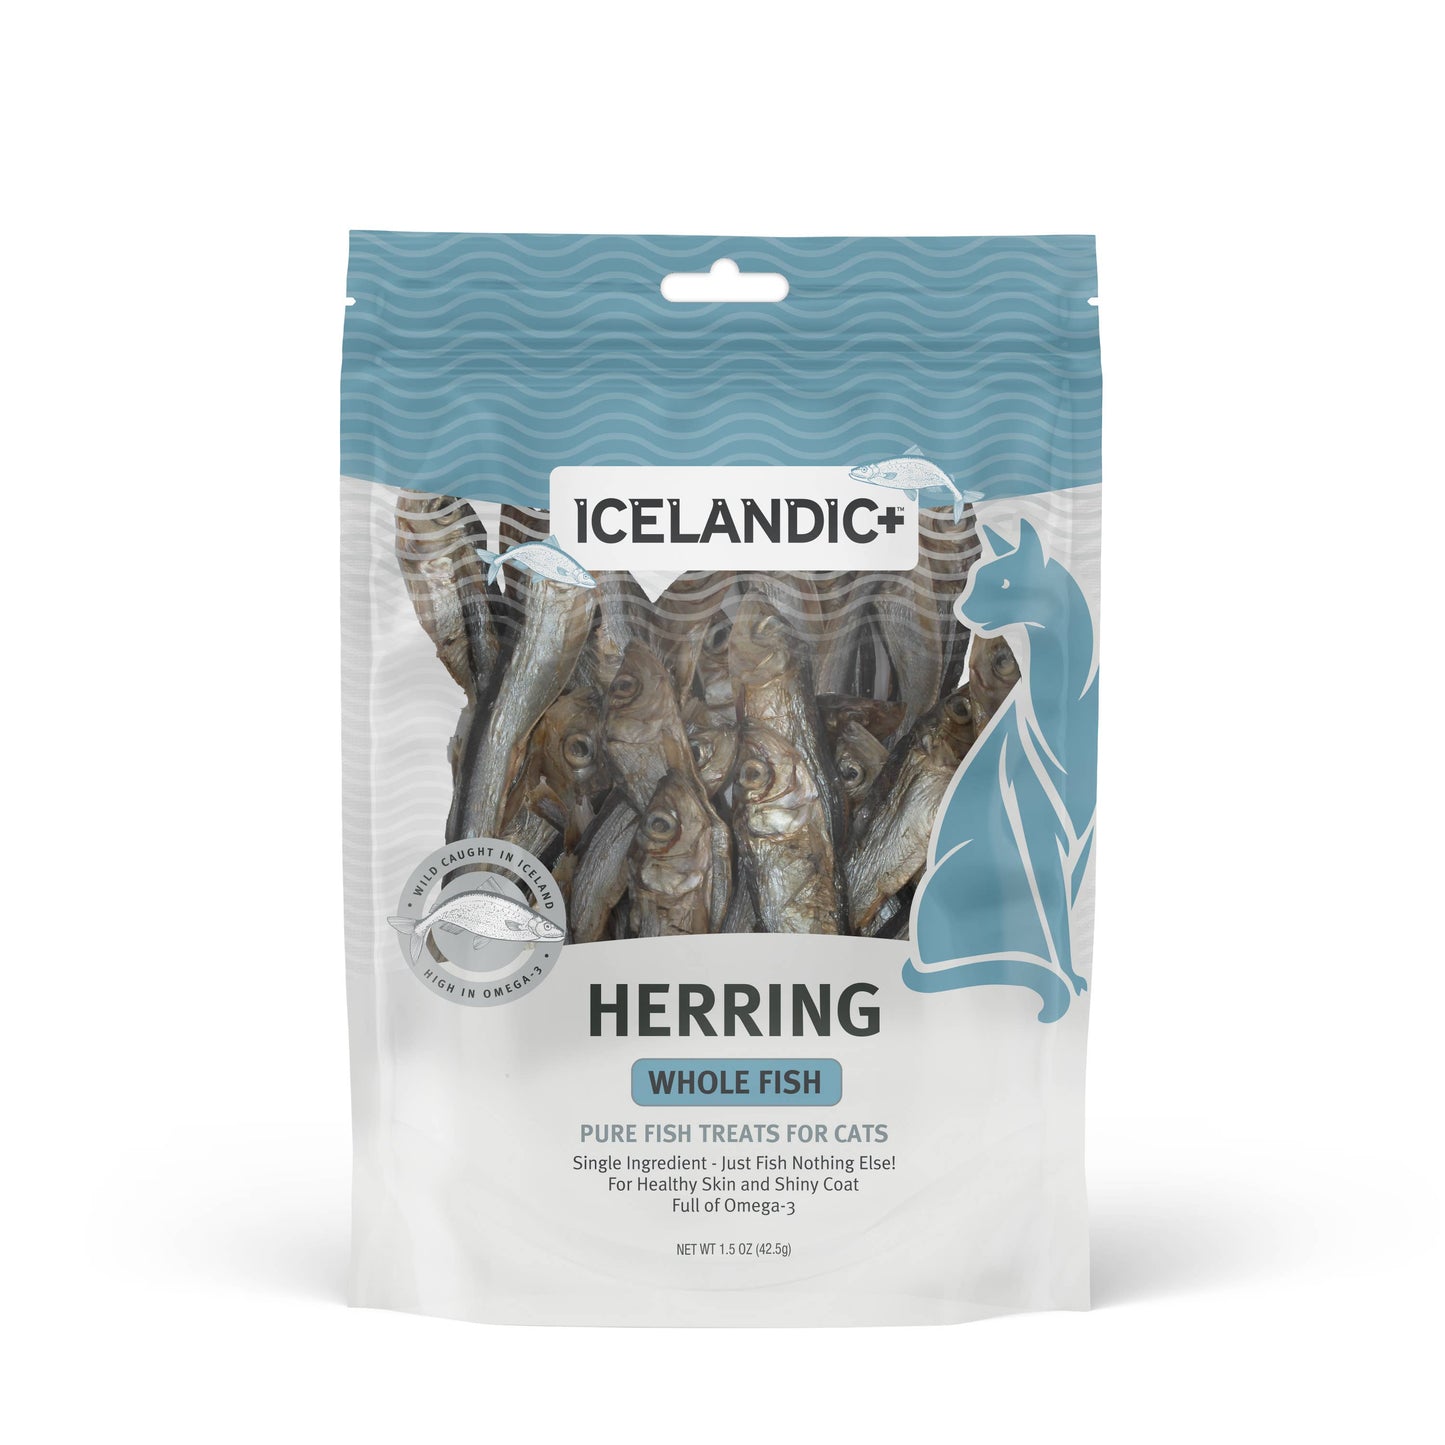 Icelandic+ Herring Whole Fish Cat Treats - 1.5oz